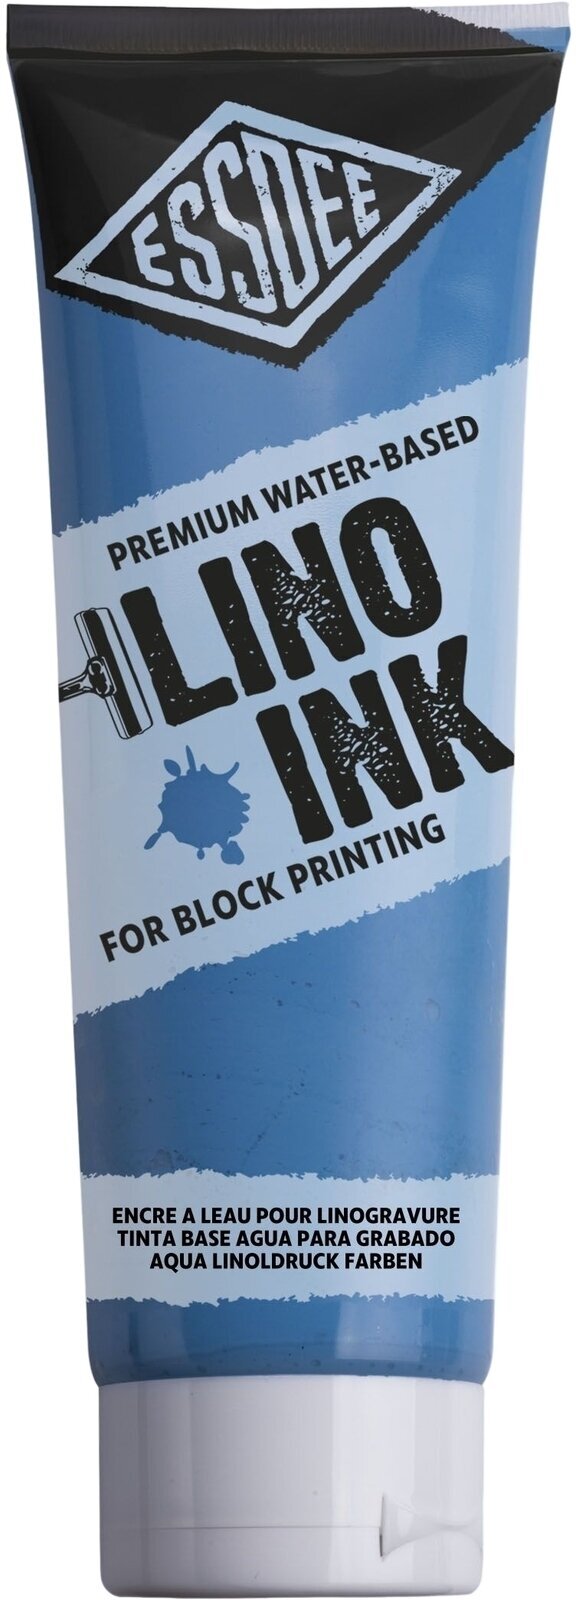 Vernice per linoleografia Essdee Block Printing Ink Vernice per linoleografia Fluorescent Blue 300 ml